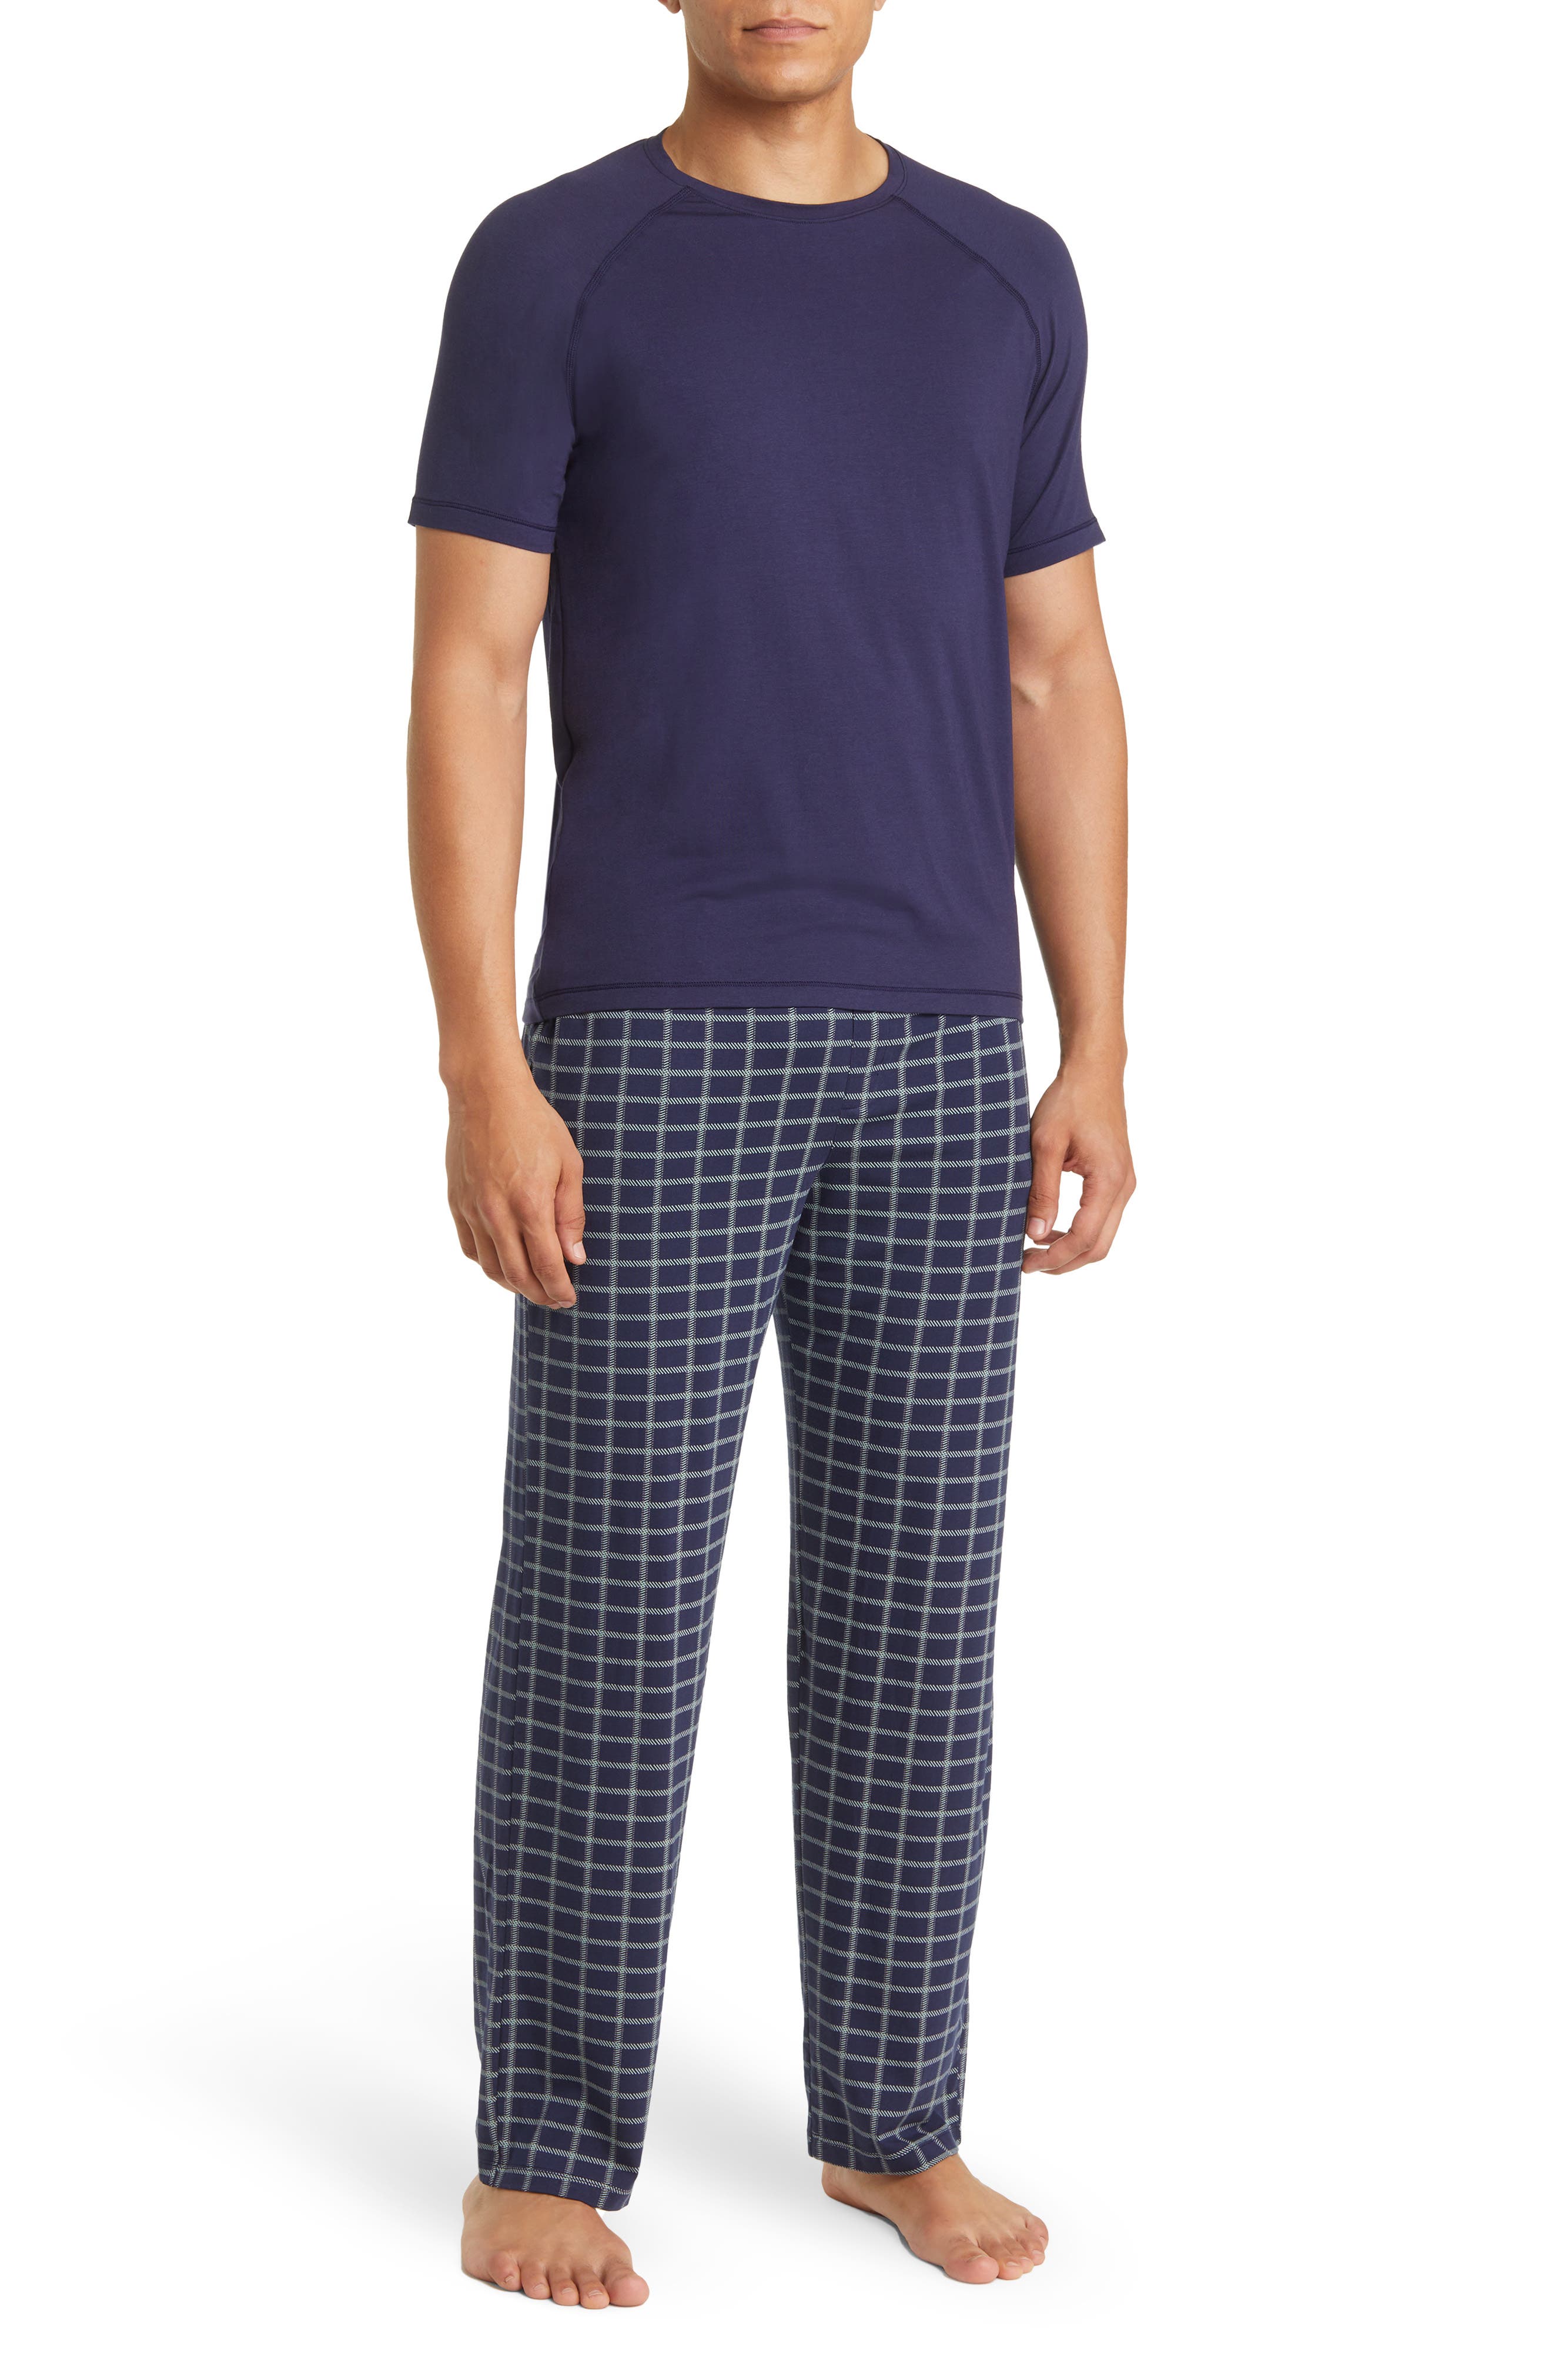 The Essentials Wardrobe Mens Loungepants Pyjama Bottoms Loungewear Cotton Jersey Pj Pants Size S-XL 